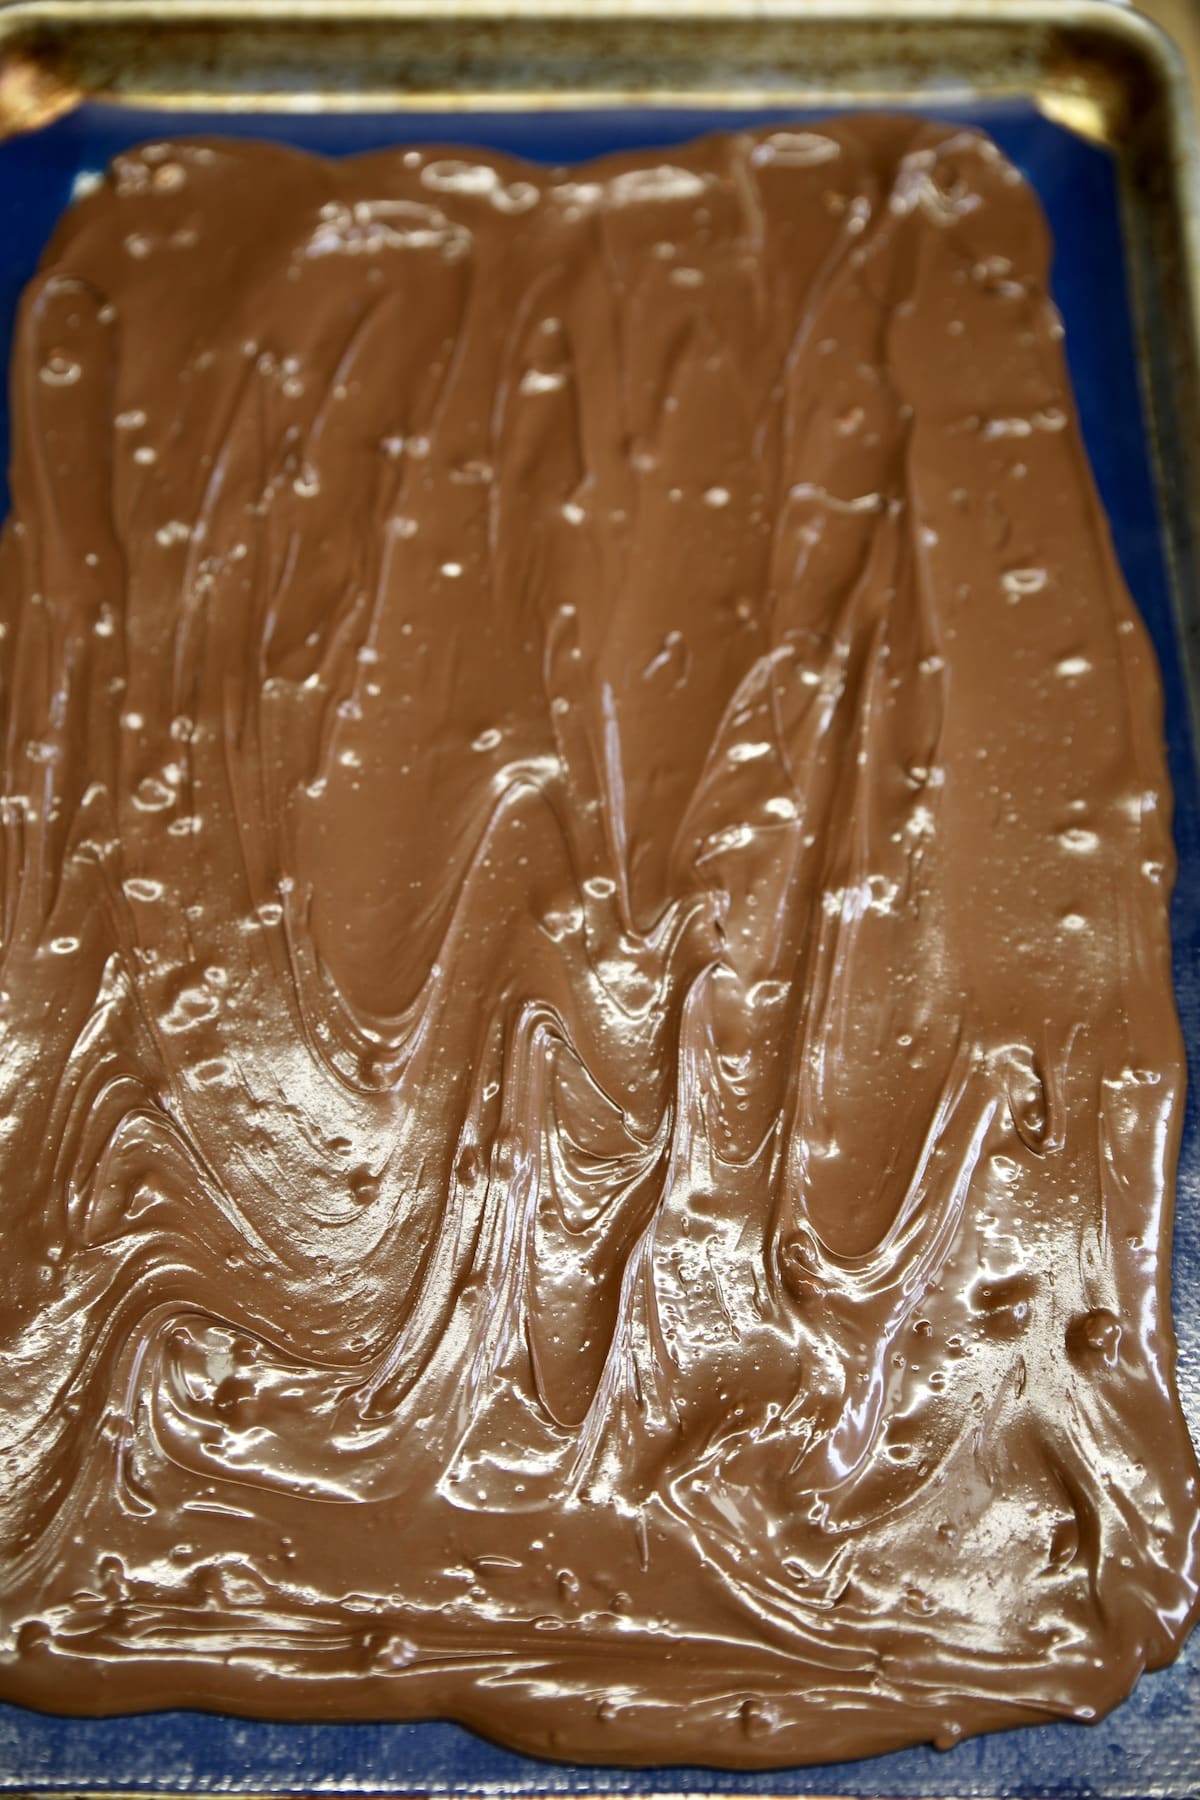 Chocolate bark on a baking sheet.